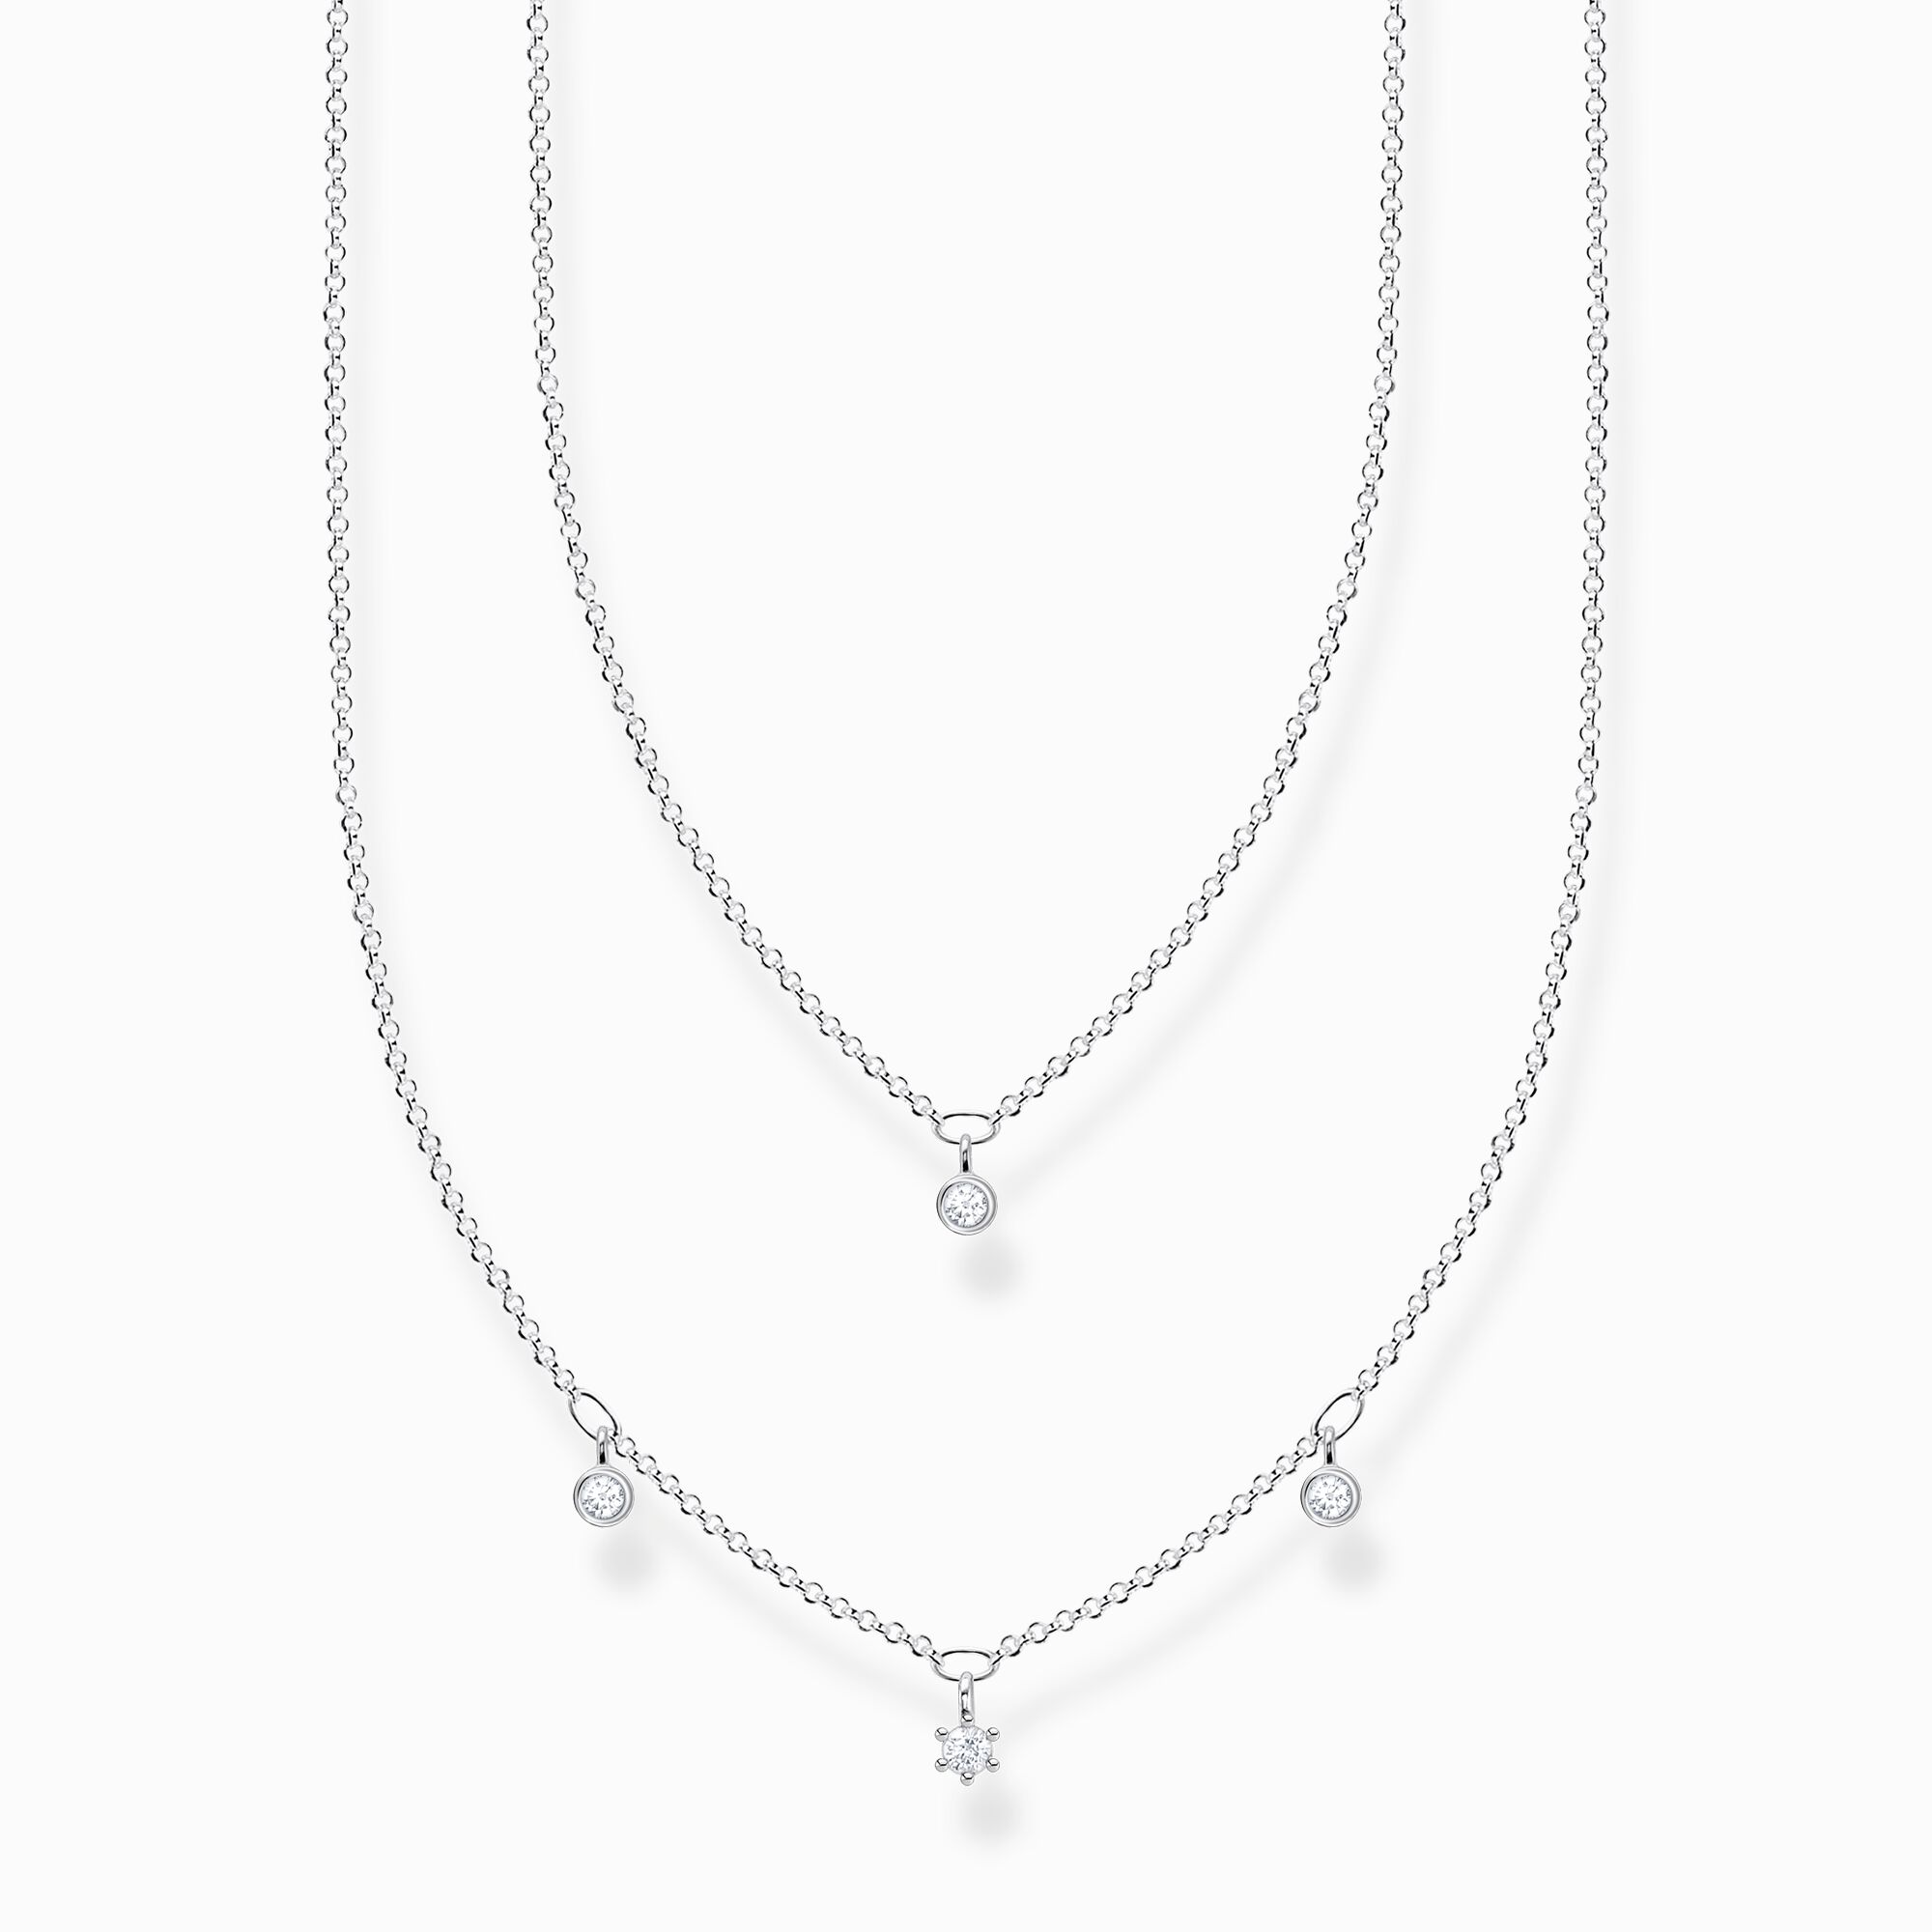 Double row necklace in silver – THOMAS SABO